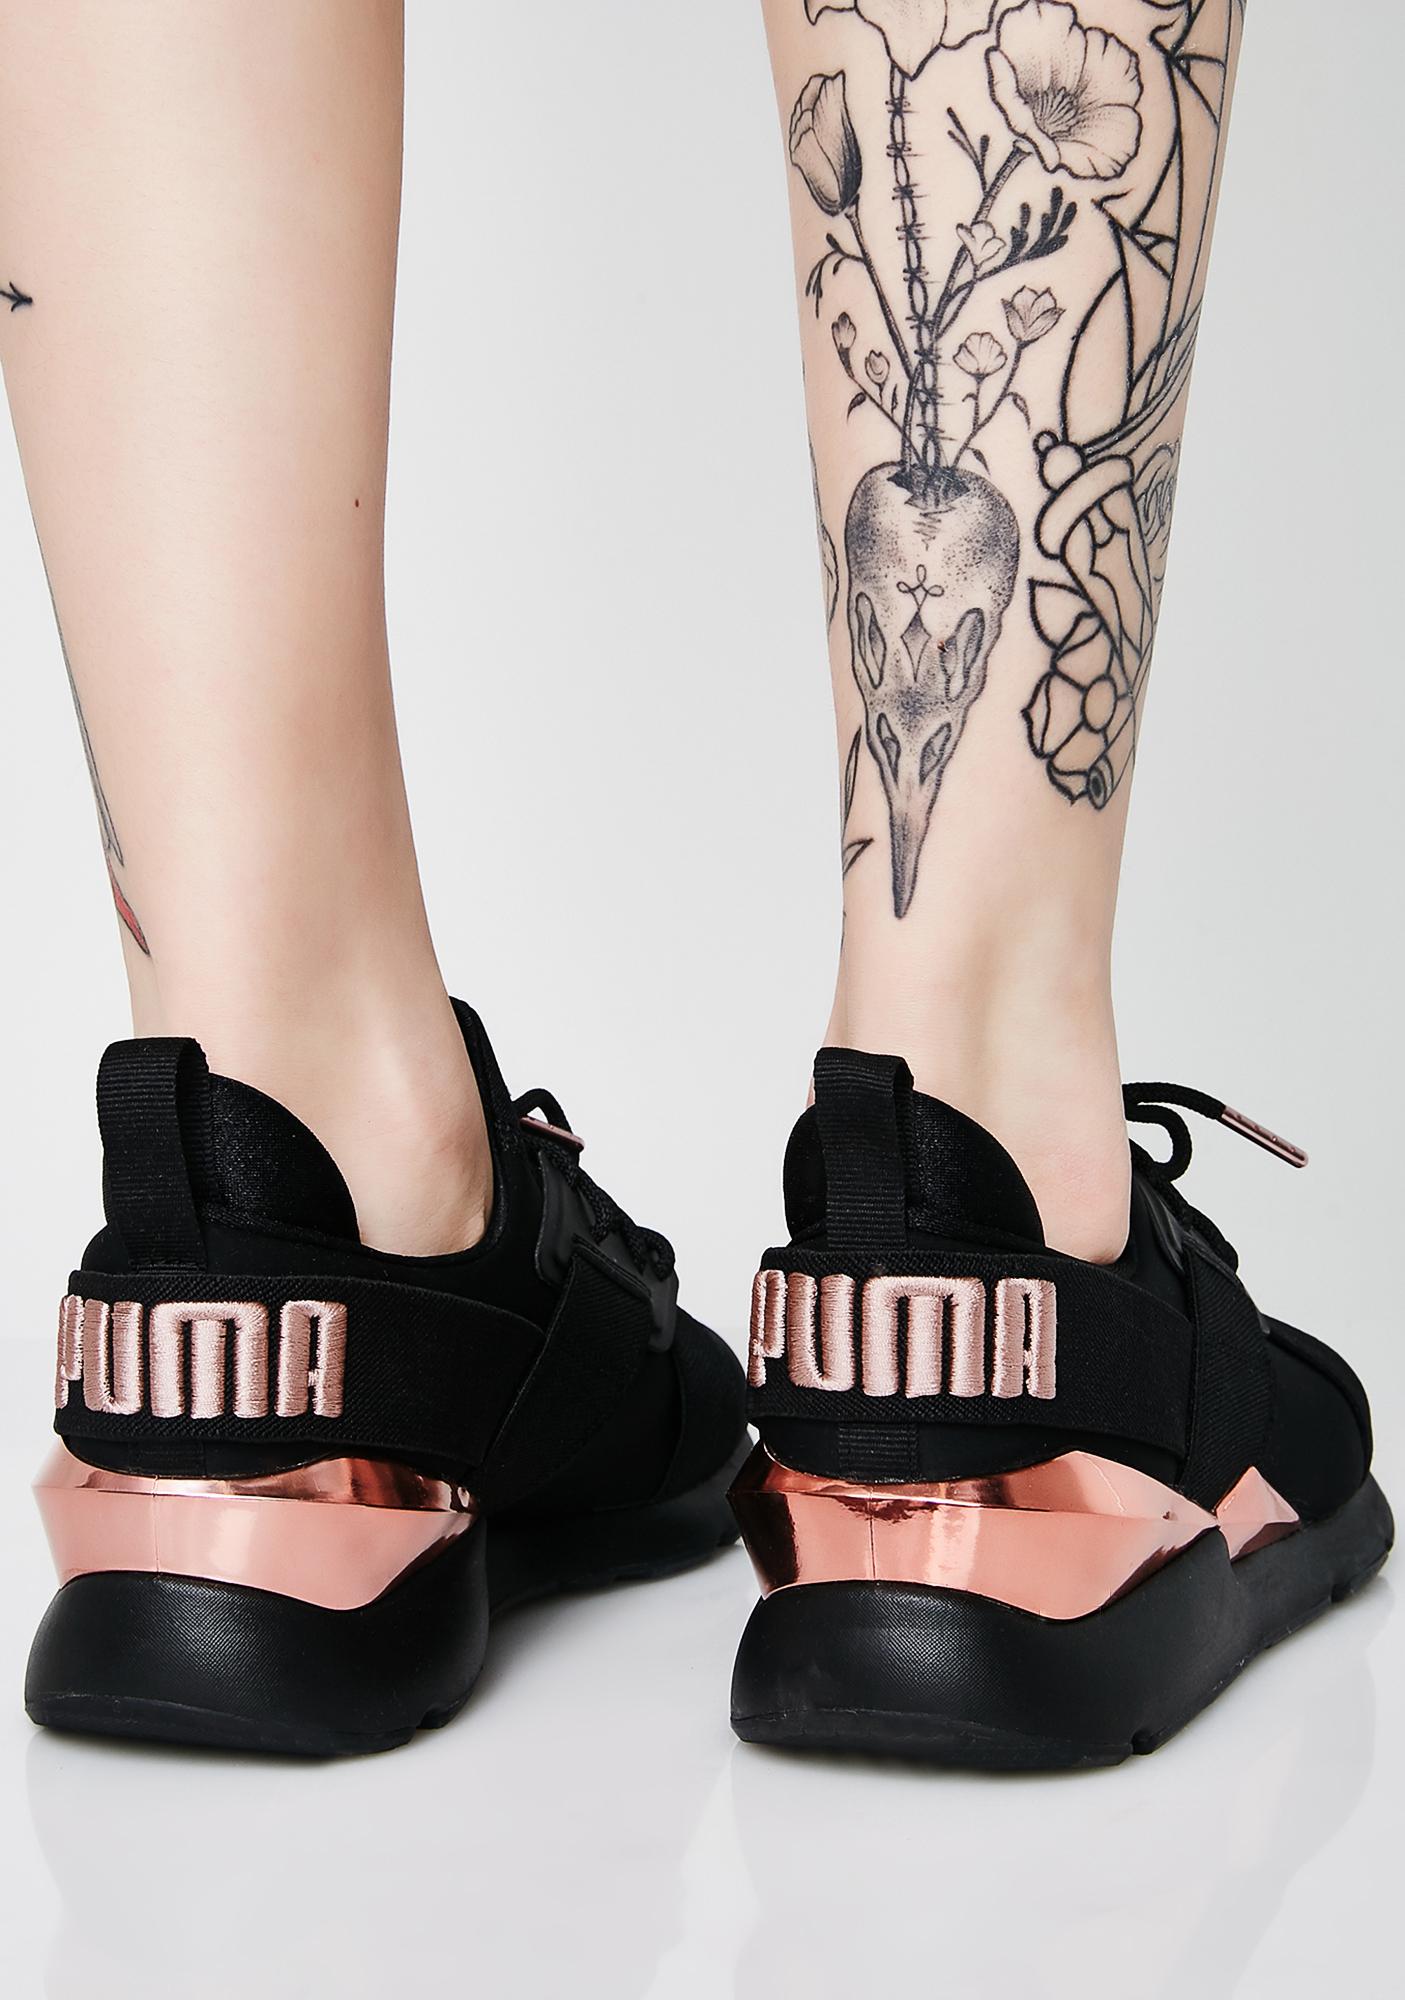 puma shoes muse metal